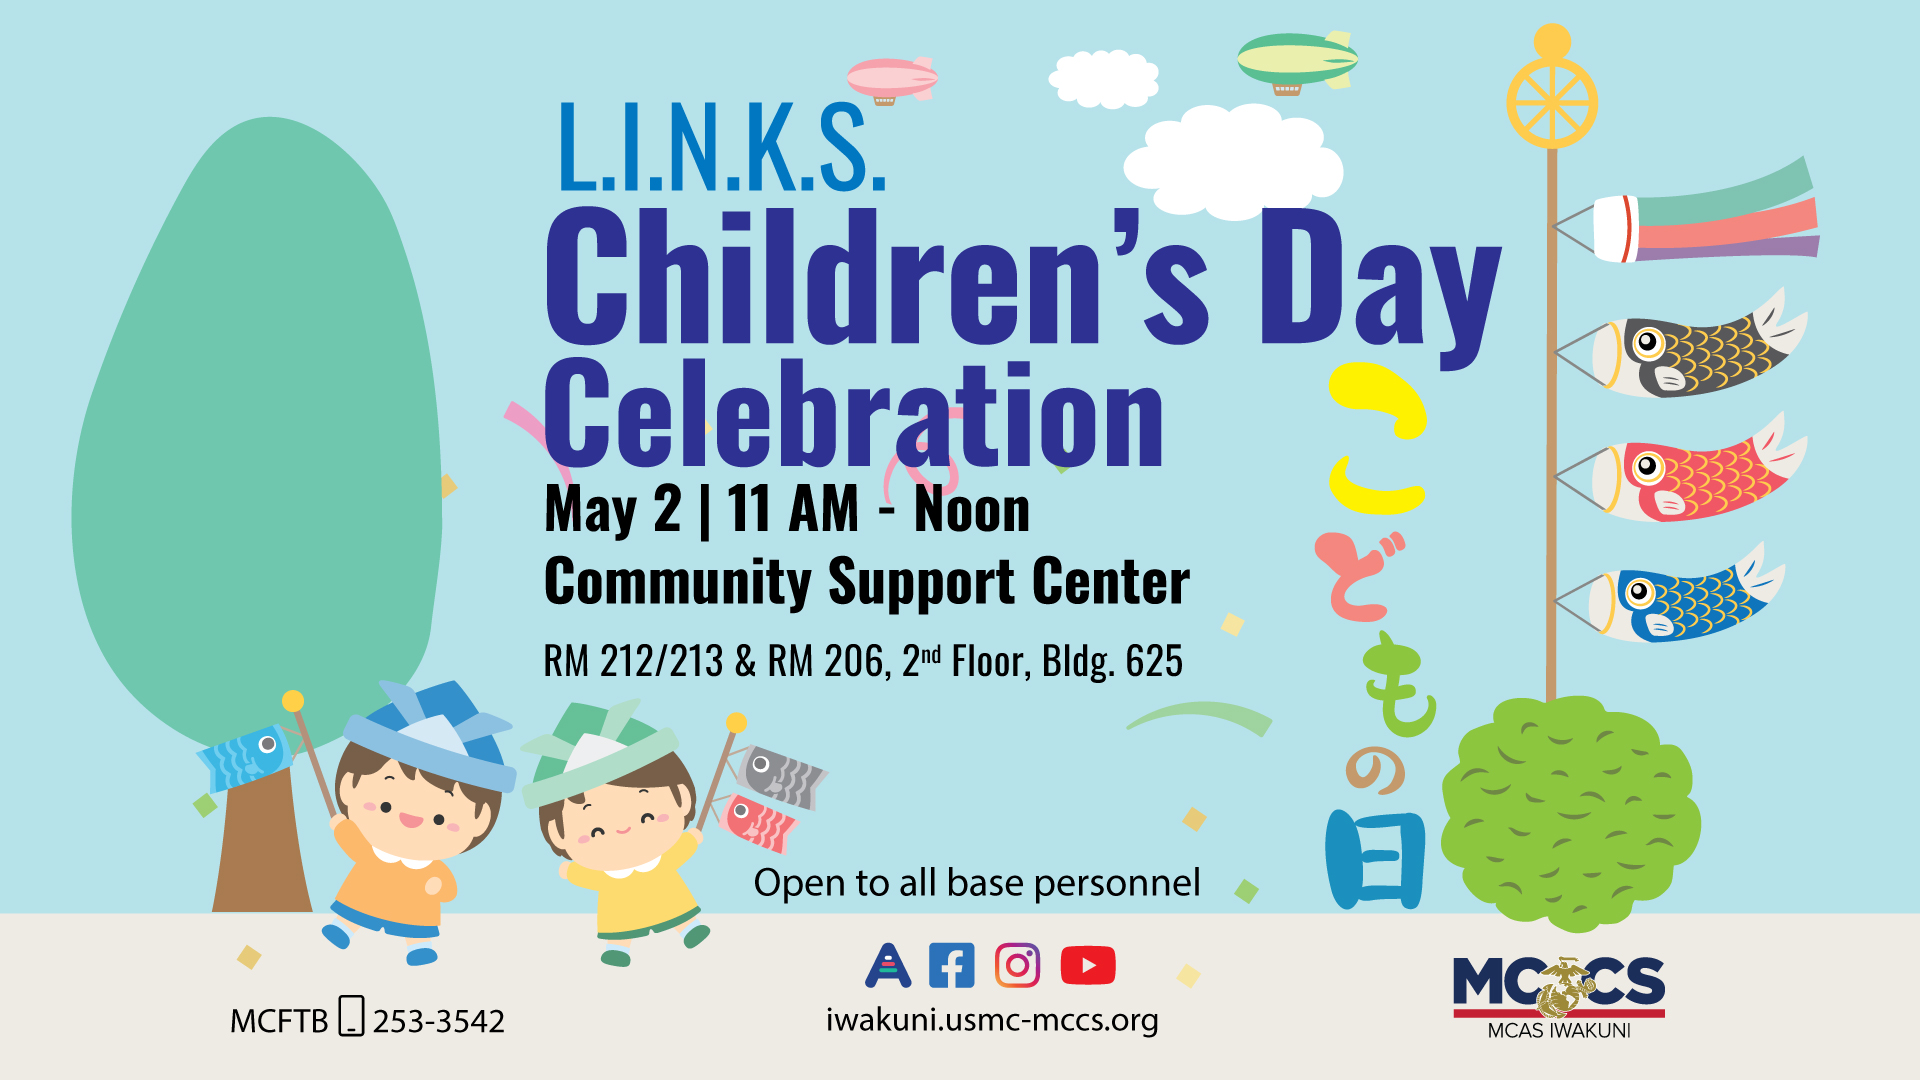 L.I.N.K.S. Children's Day Celebration